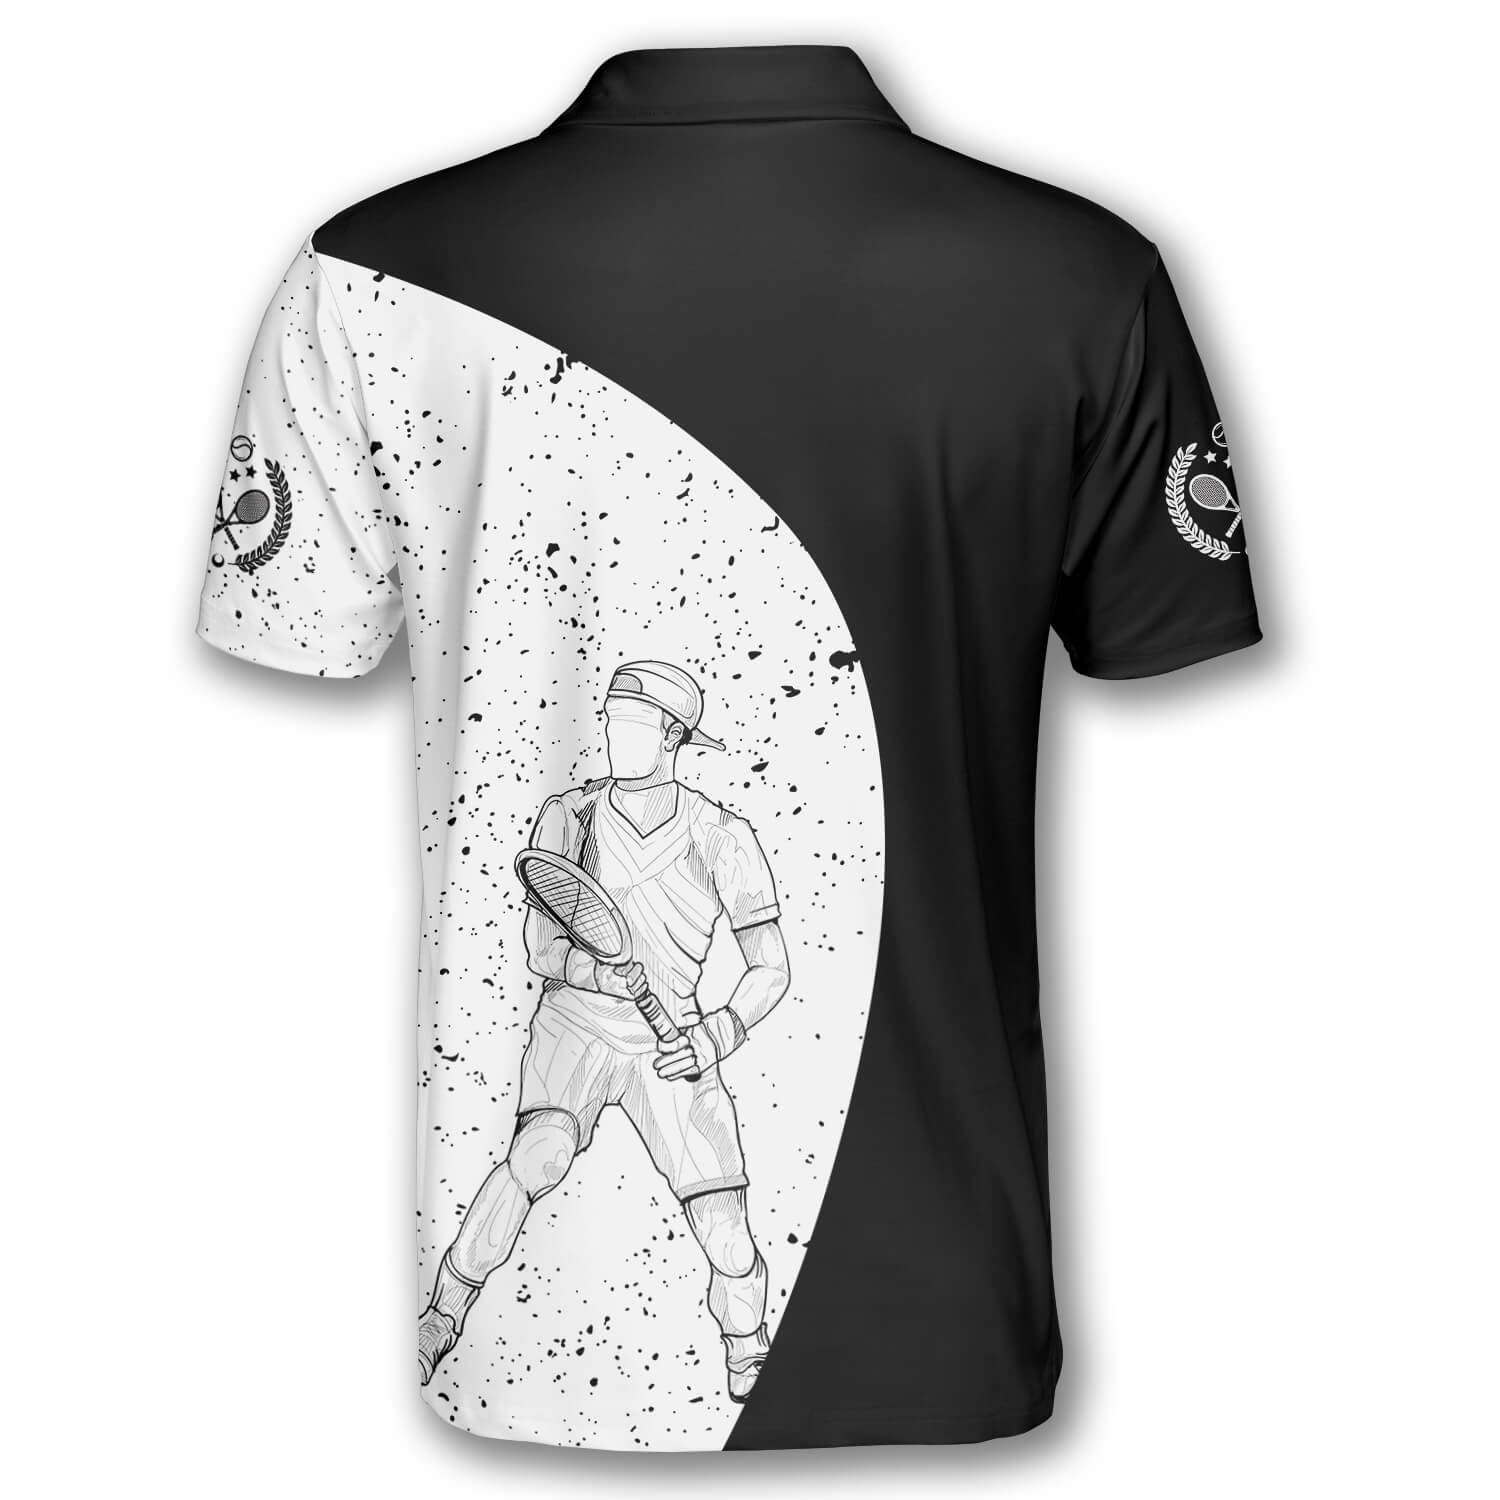 Tennis Silhouettes Black White Version Custom Tennis Shirts for Men